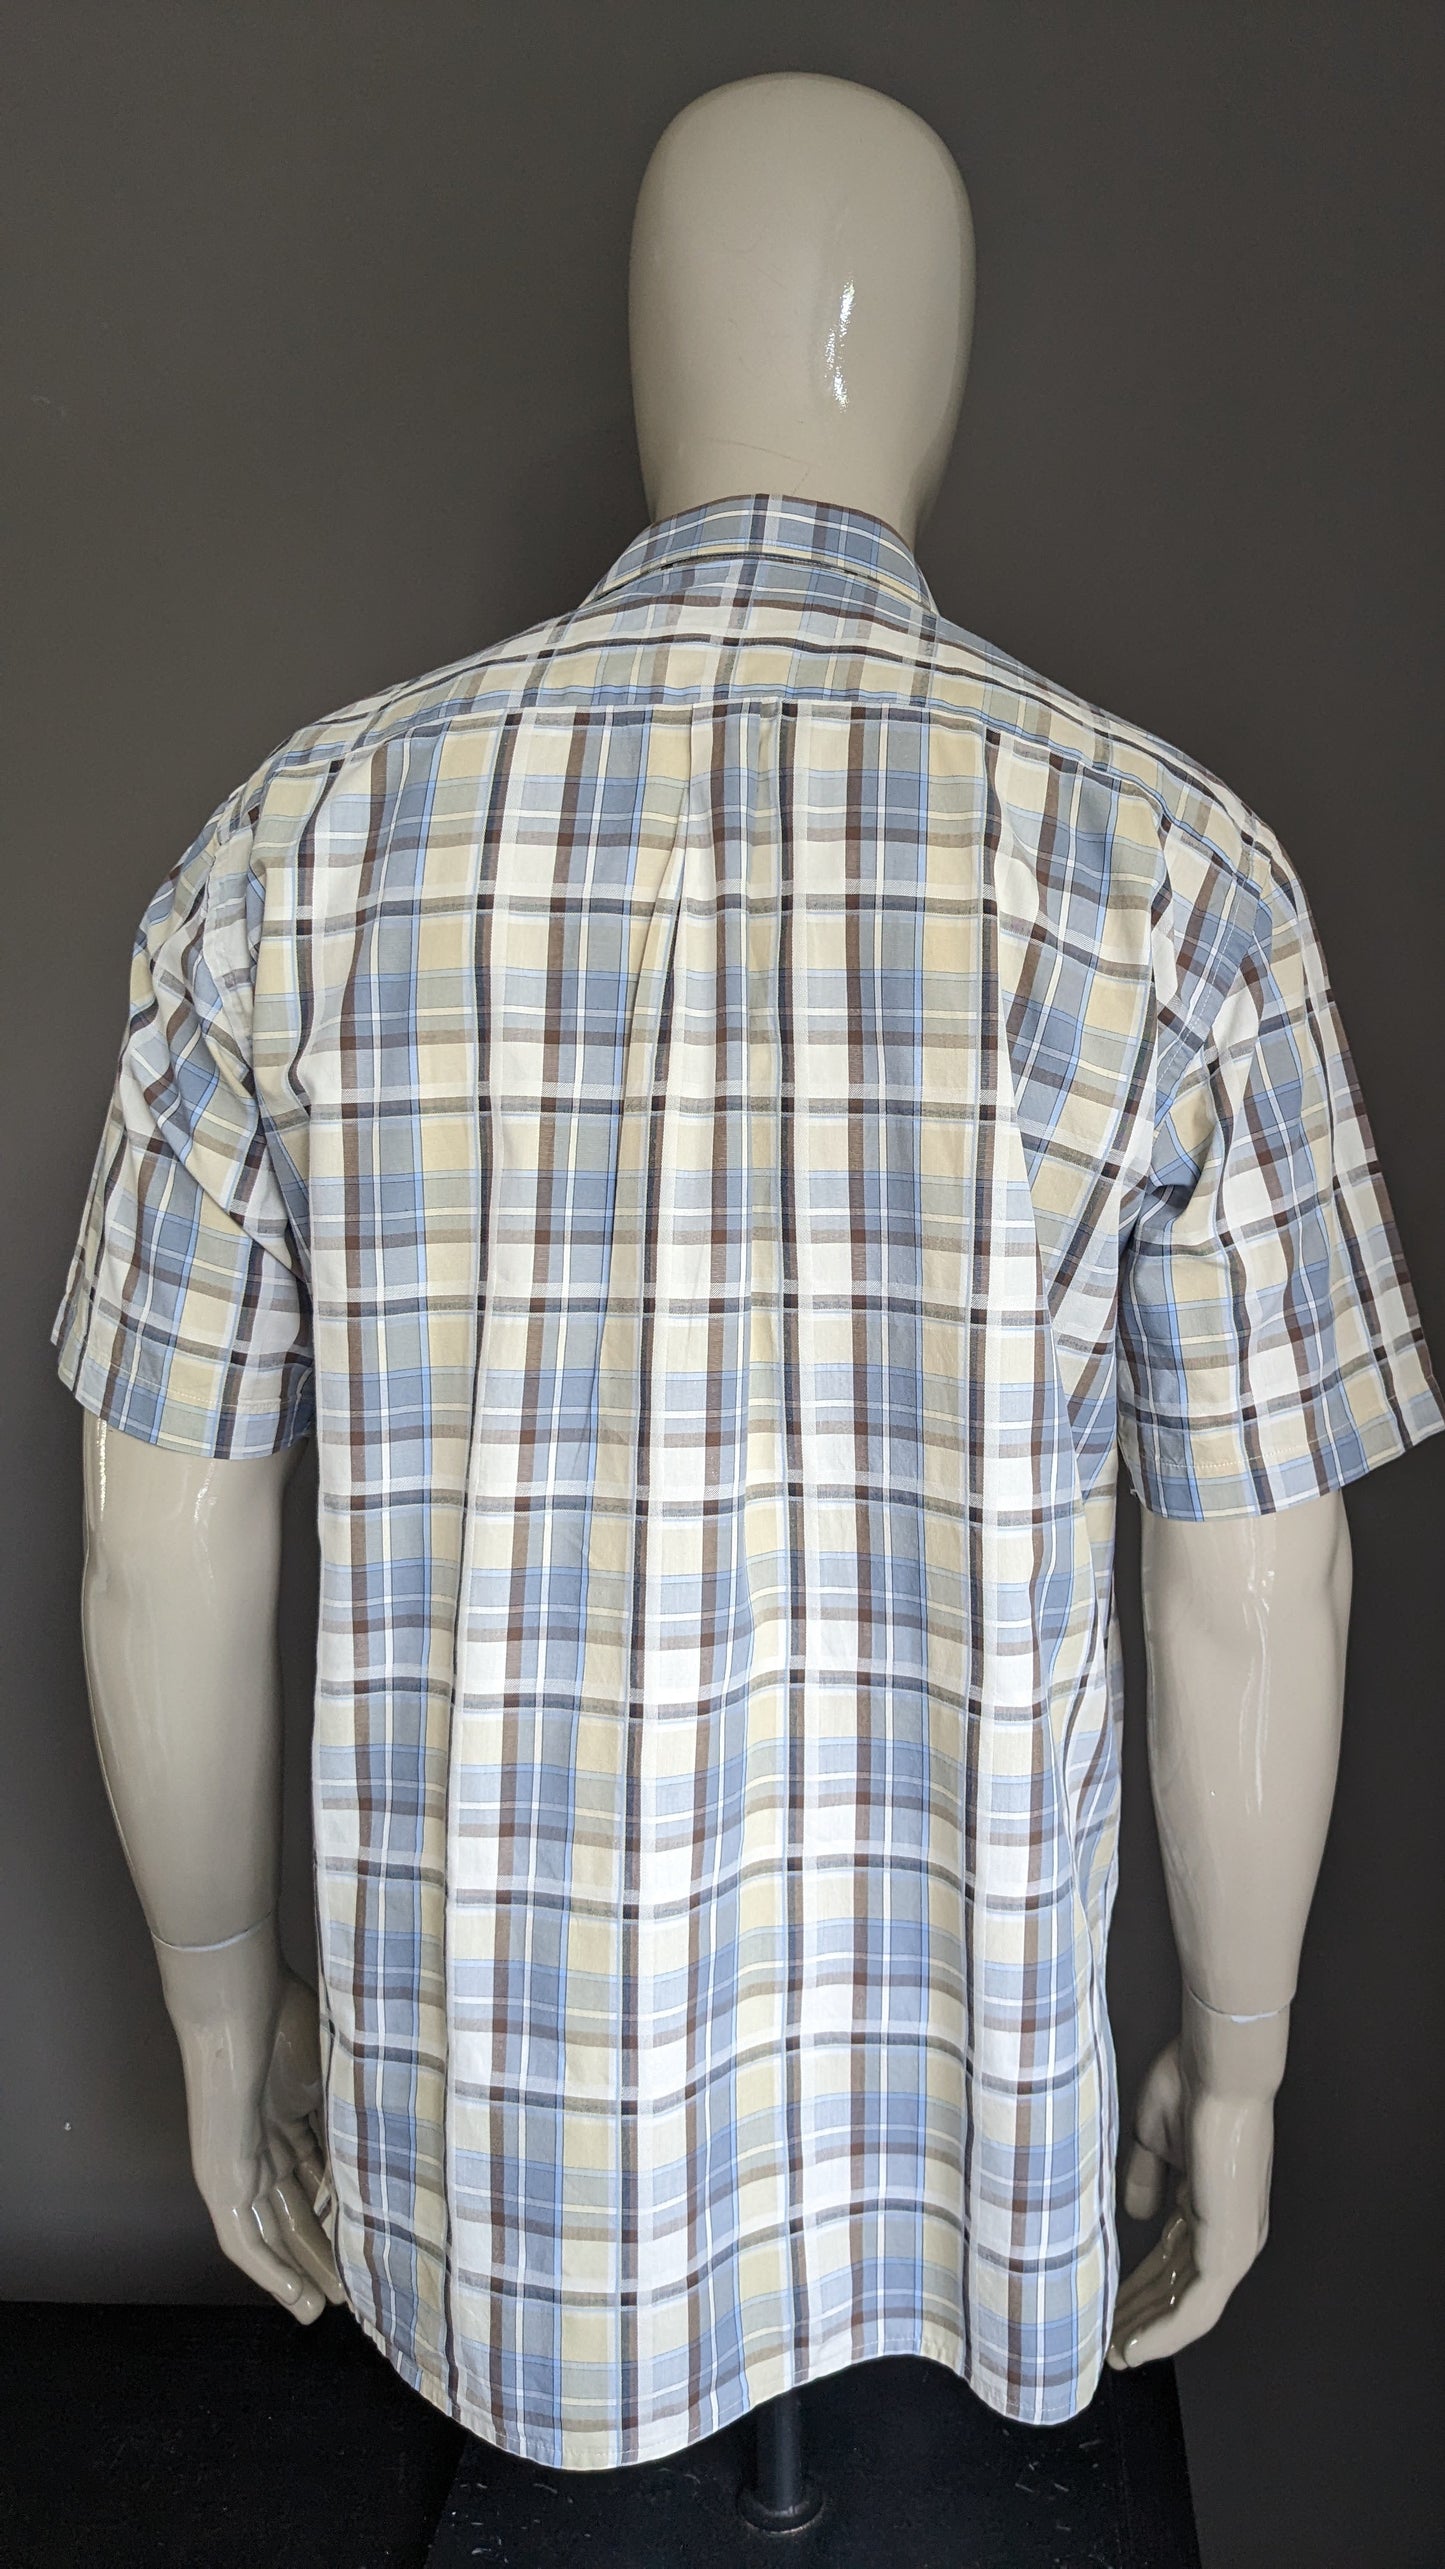 Quadrus shirt short sleeve. Yellow brown blue checked. Size L / XL.